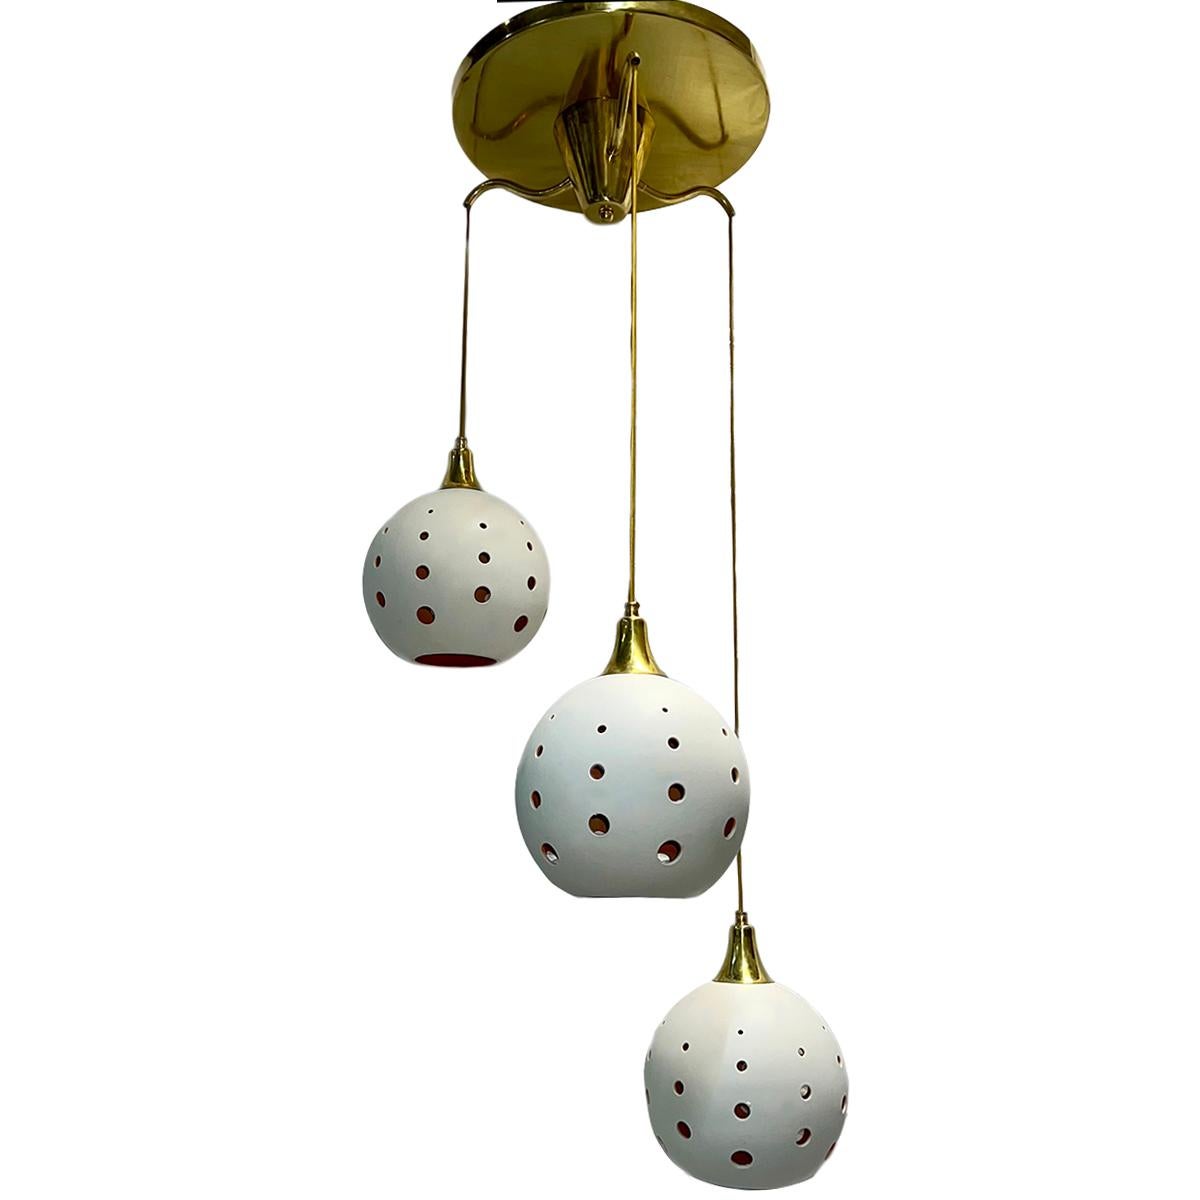 A circa 1960's Italian light fixture with porcelain pendants and interior lights.

Measurements:
Diameter: 24